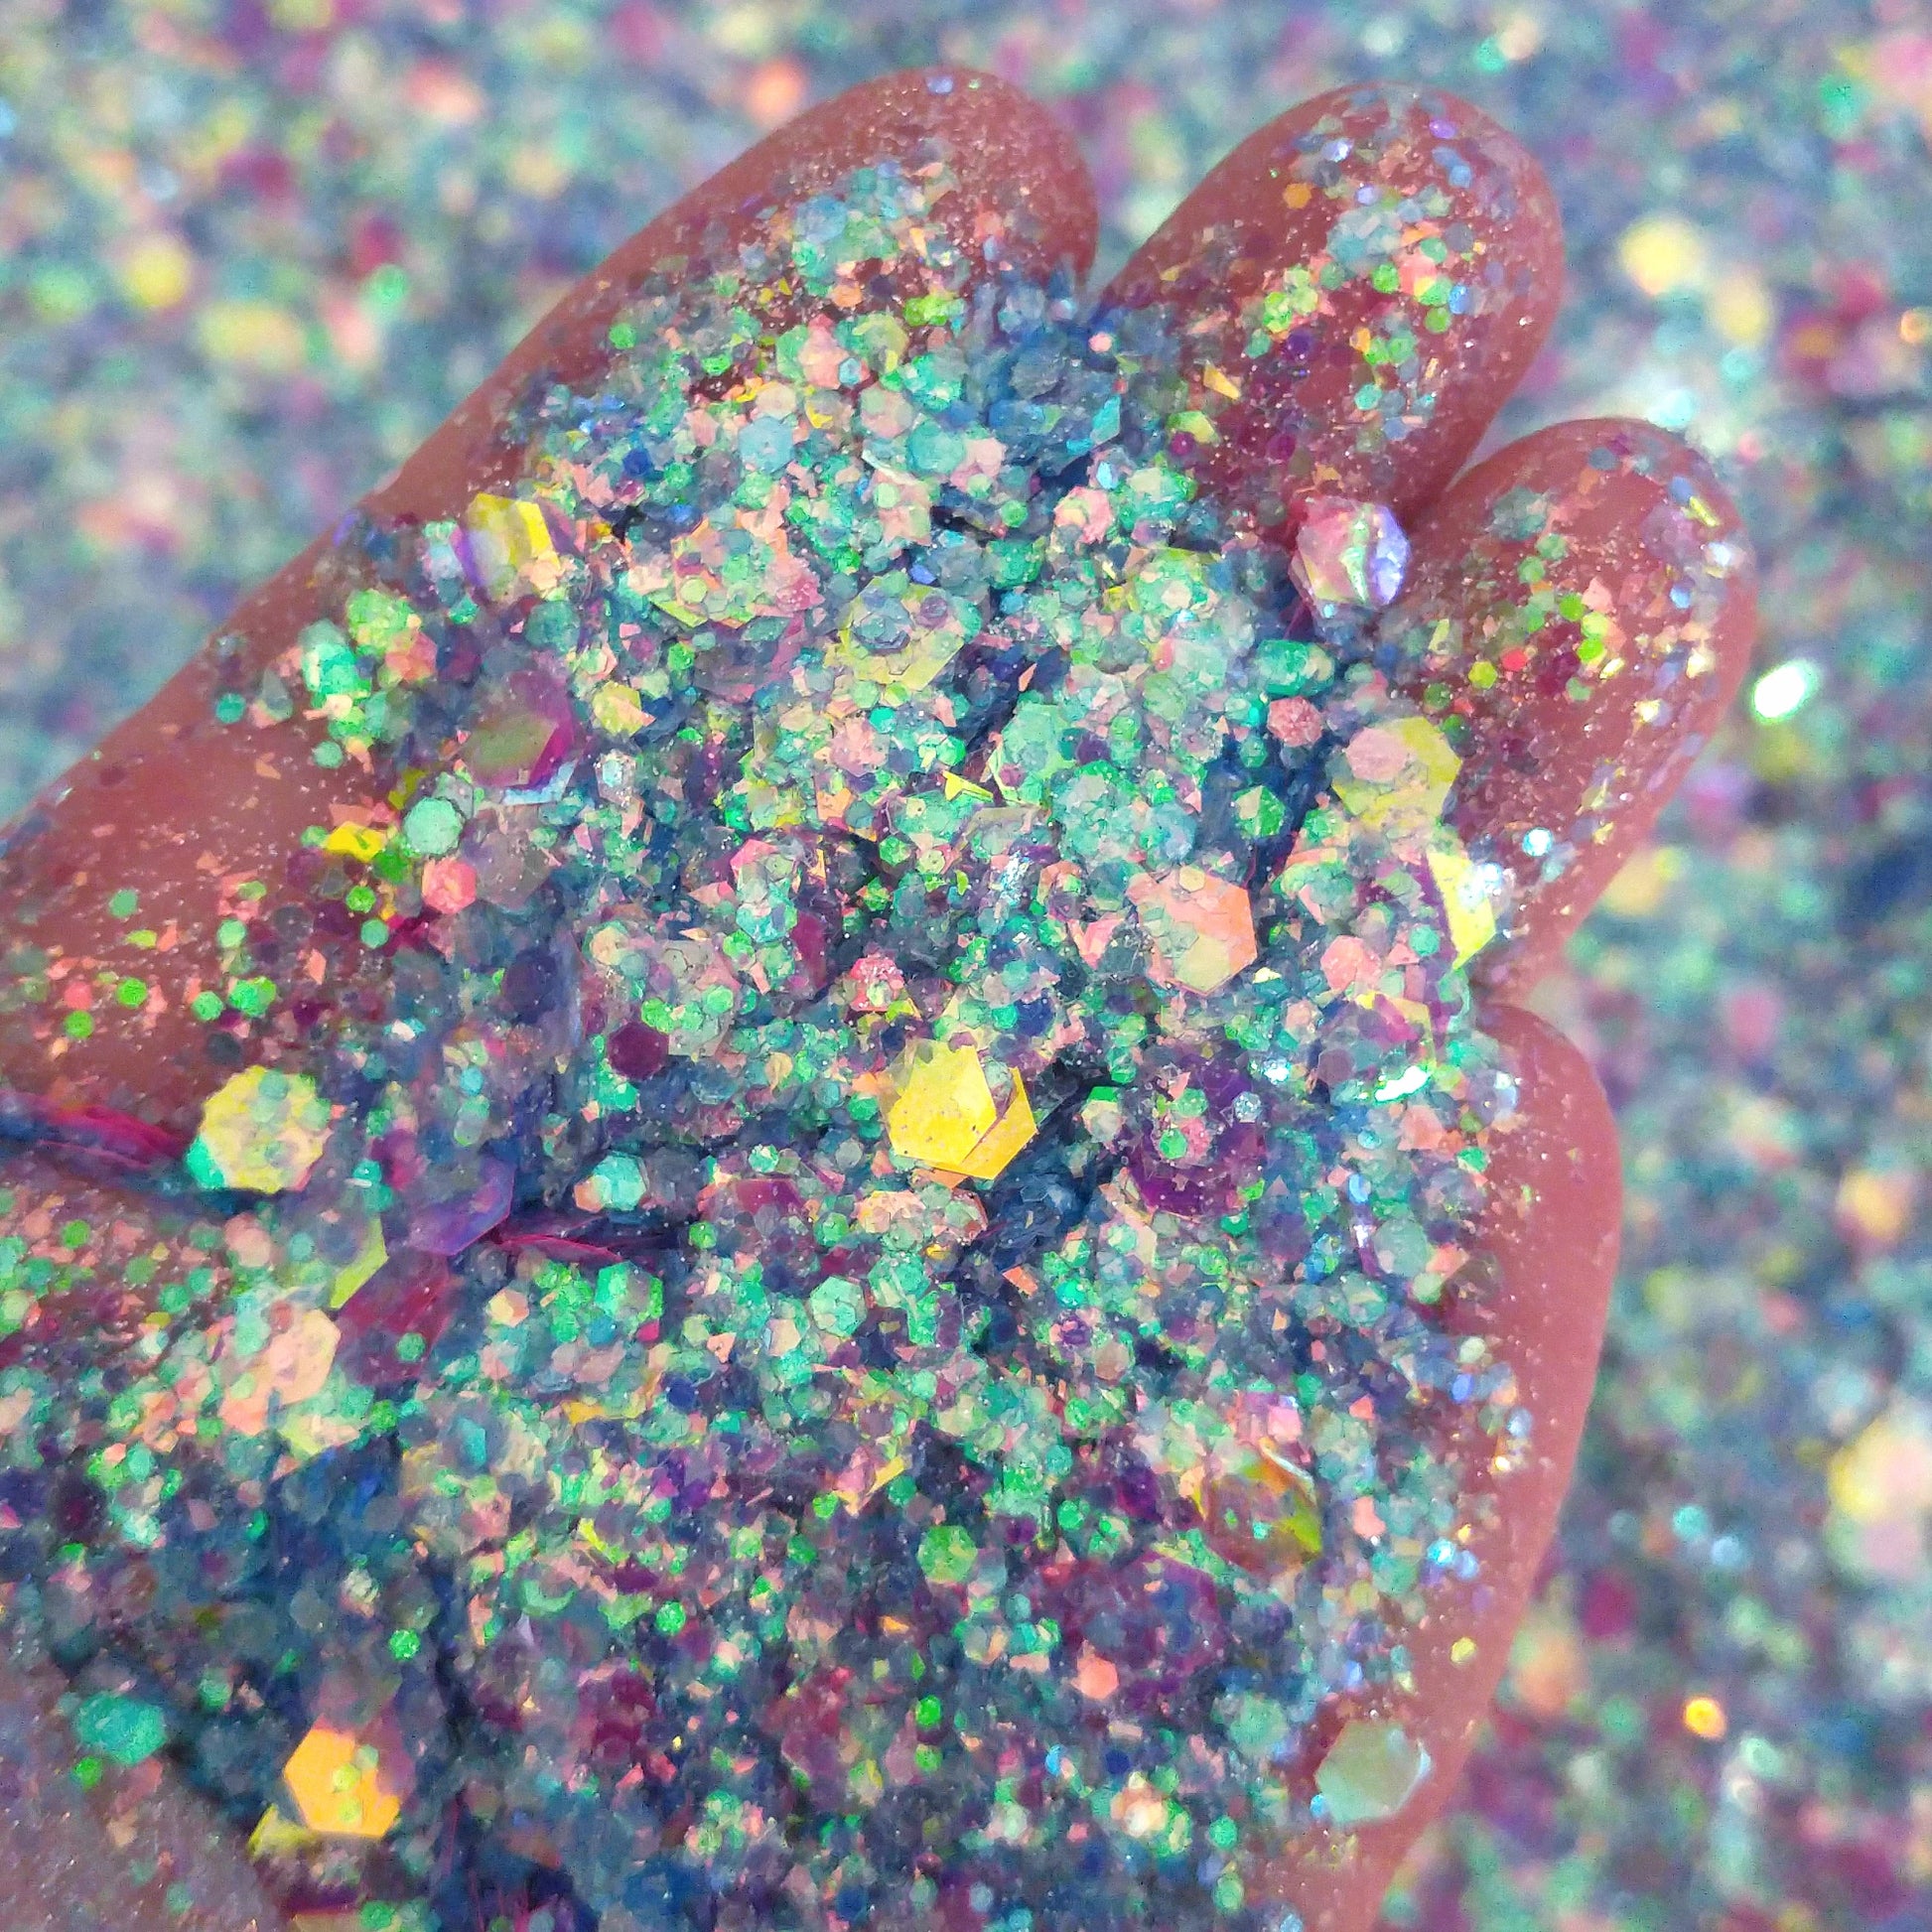 Pink and Blue Iridescent Glitter Mix - Sugar Plum By Crazoulis Glitter